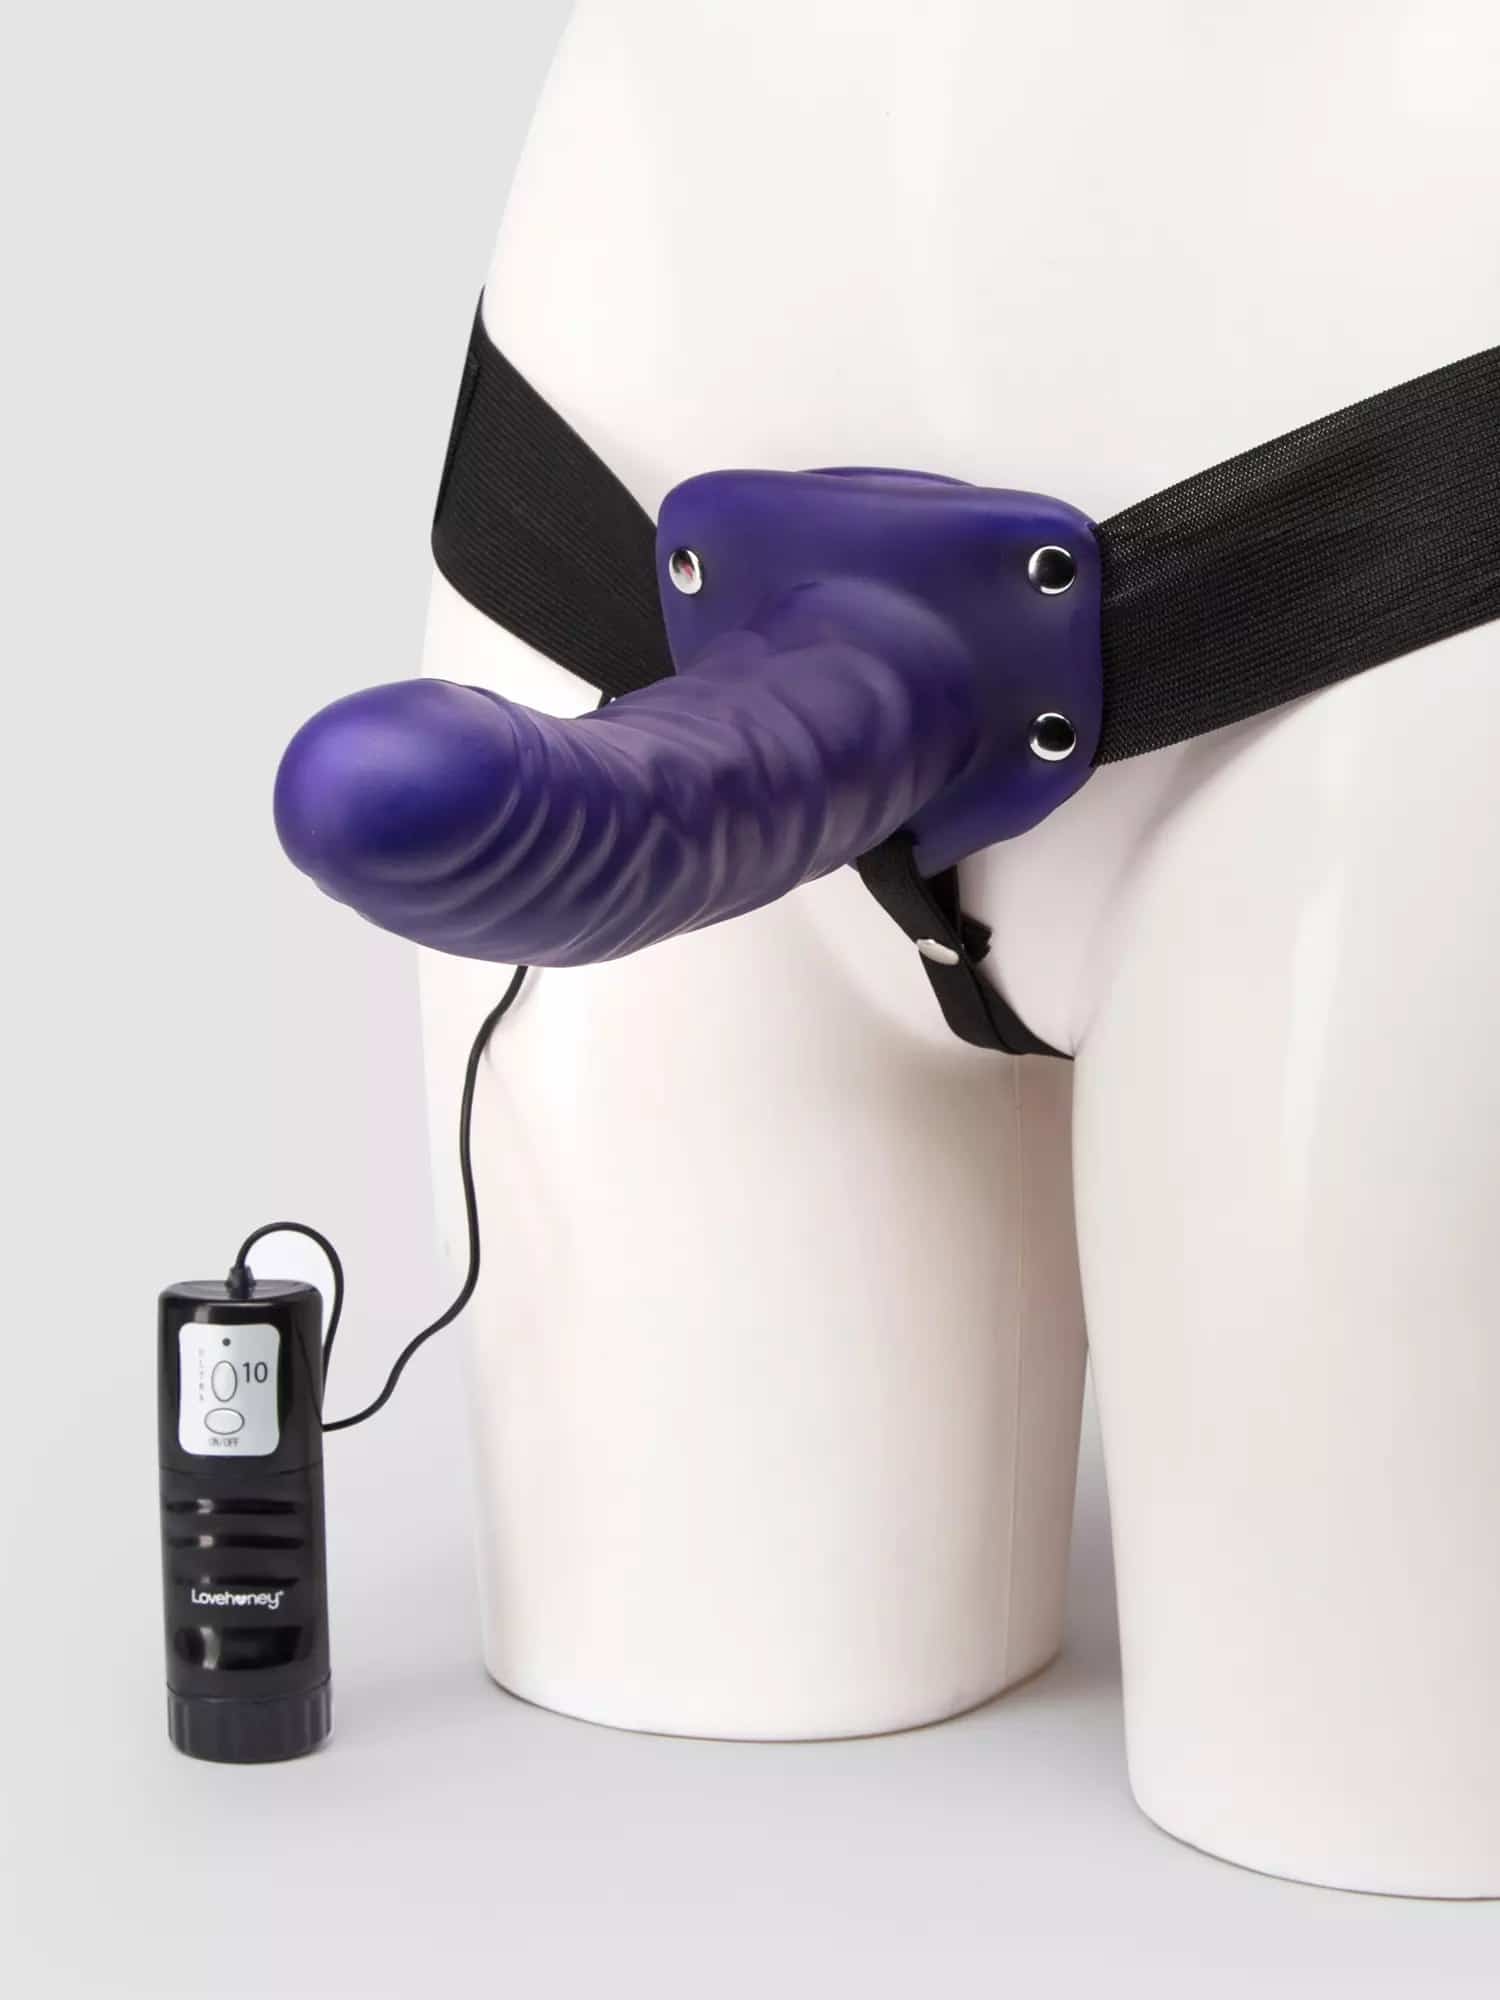 Best of Strap on vibrators for men